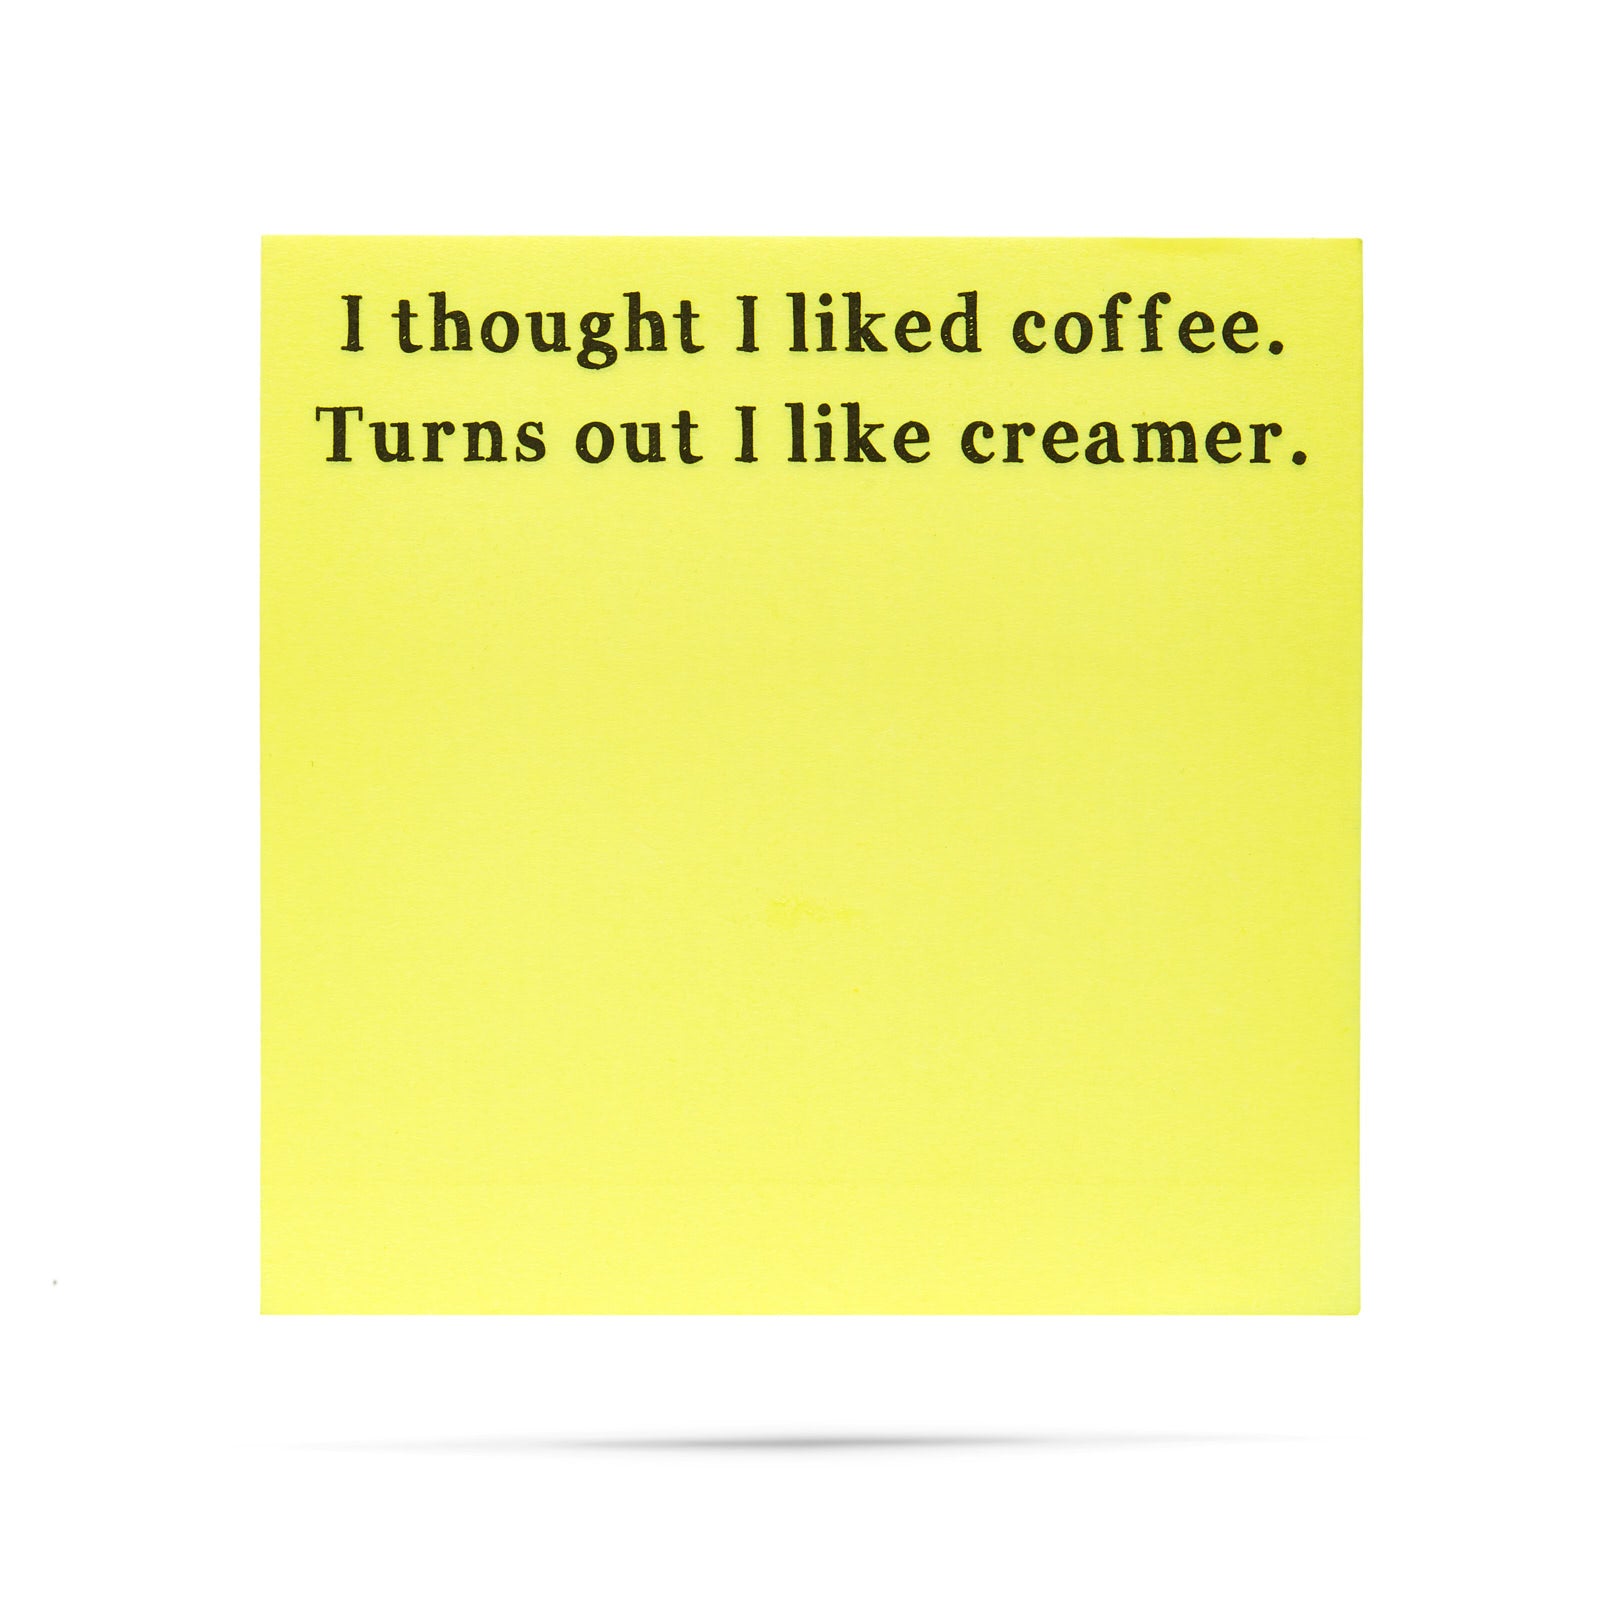 I thought I liked coffee. Turns out I like creamer. 100 sheet sticky note pad